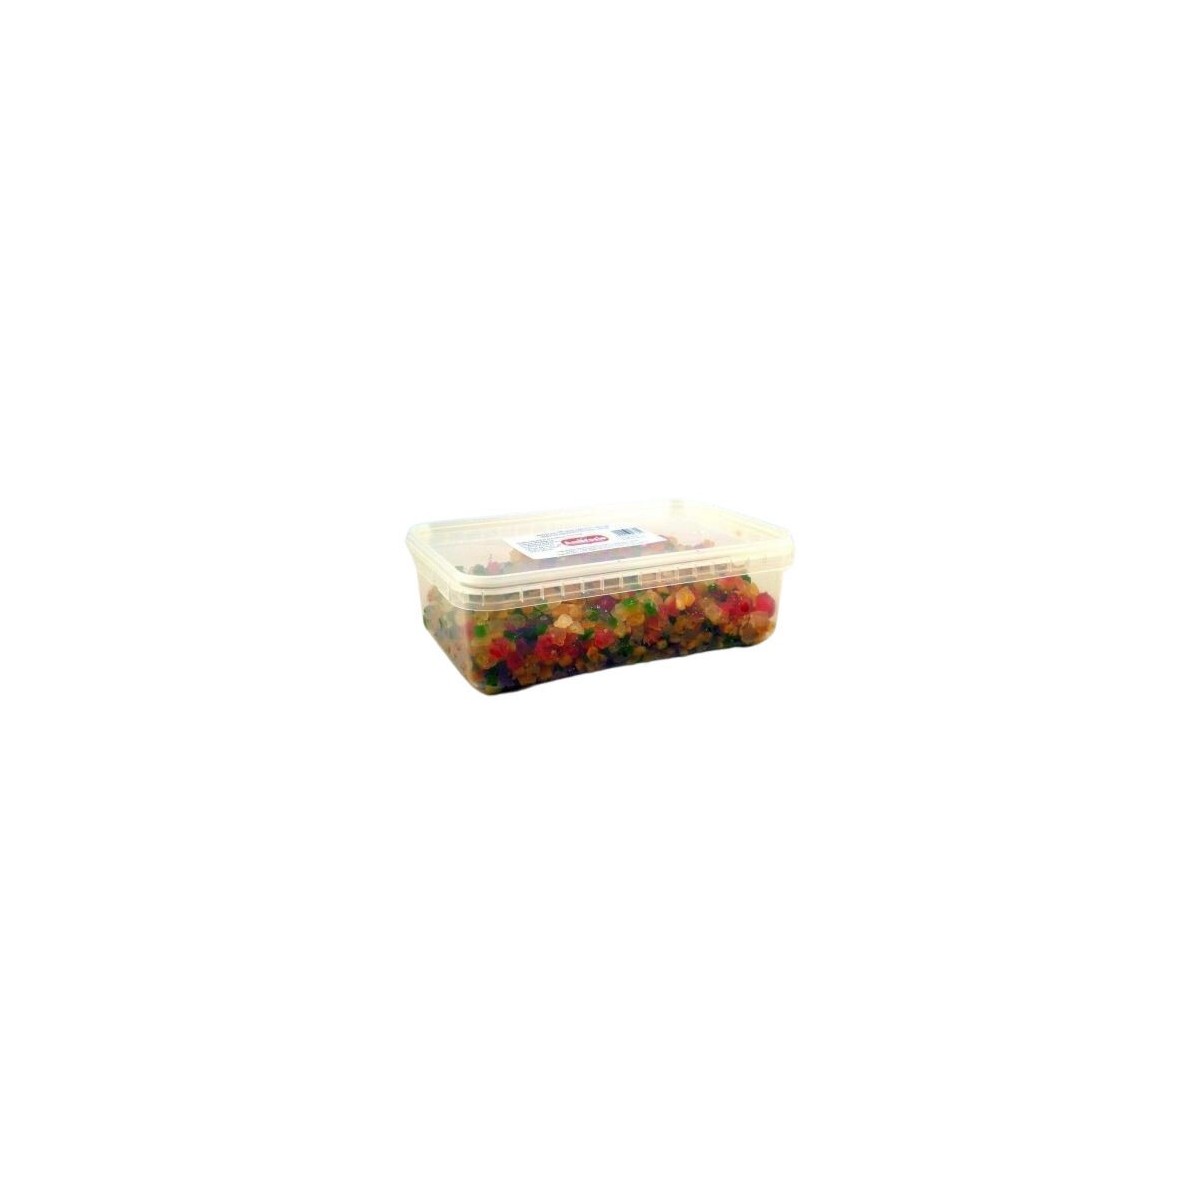 CANDIED FRUITS CHOPPED +-15% CHERRIES 900GR  BOX